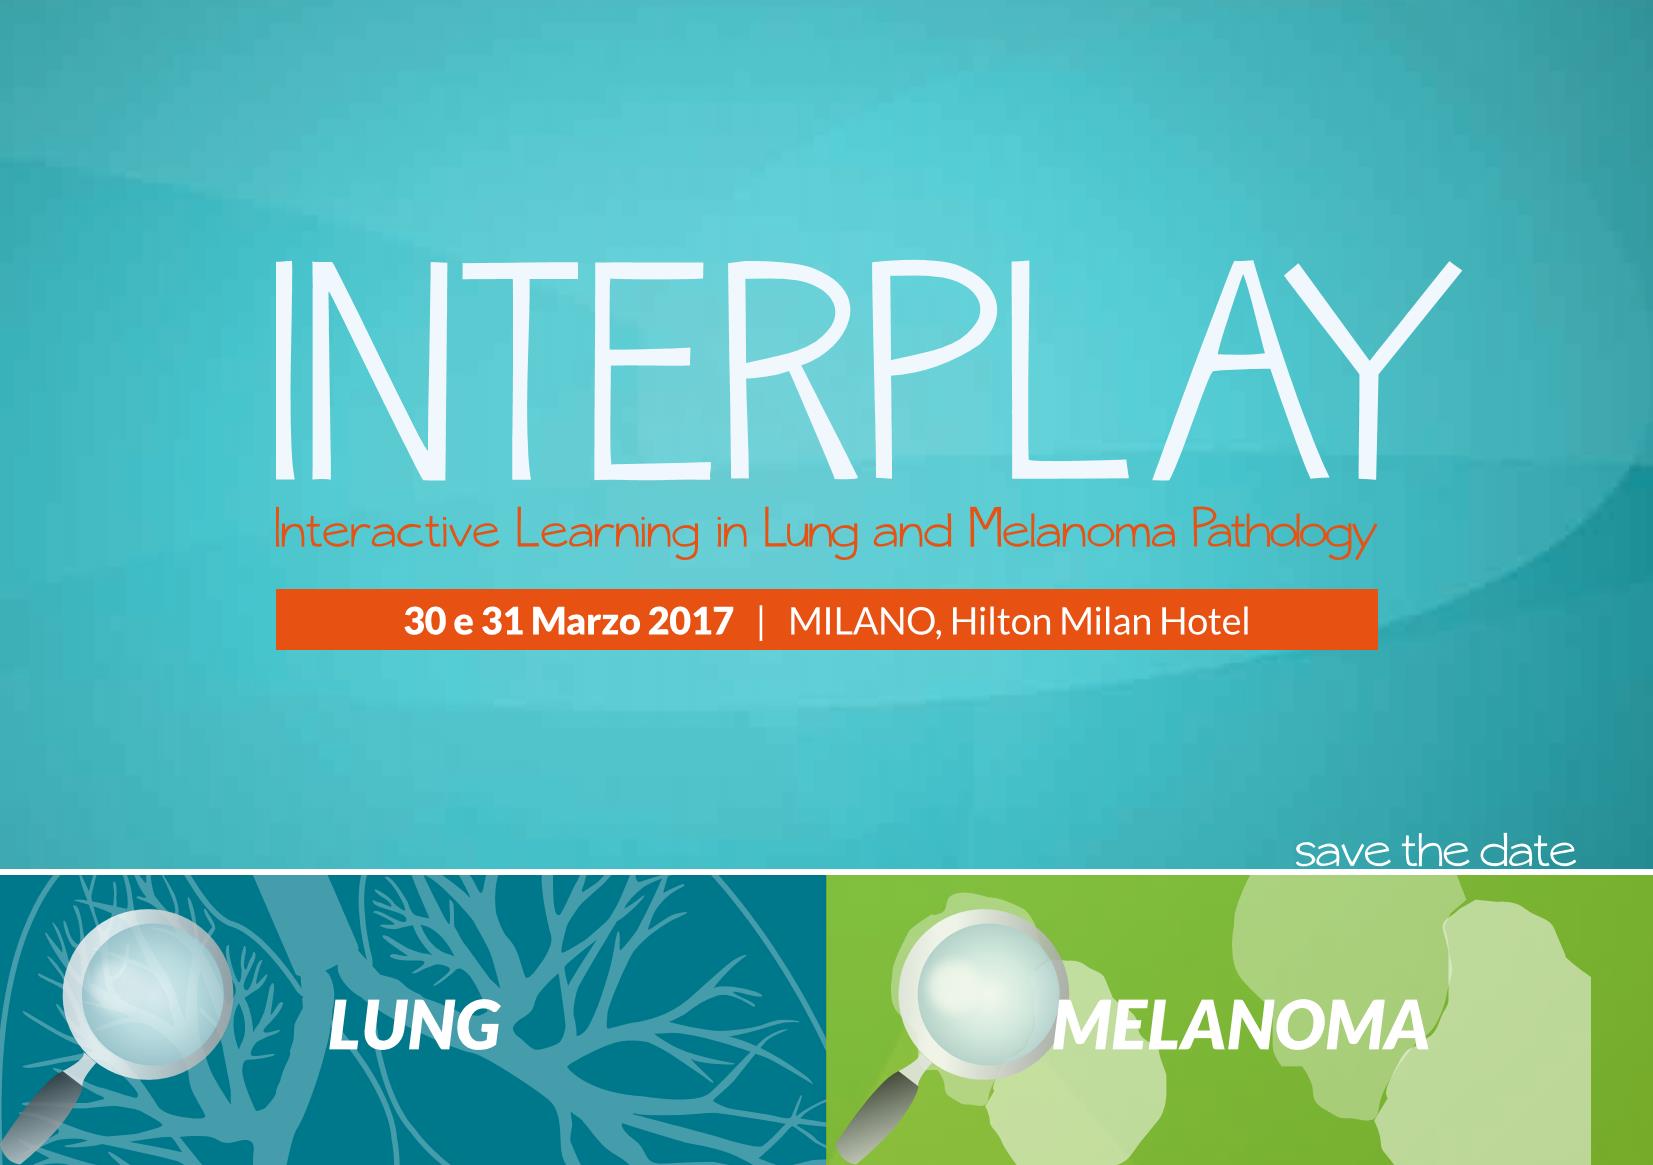 Interplay 30 31 marzo Milano Page 1